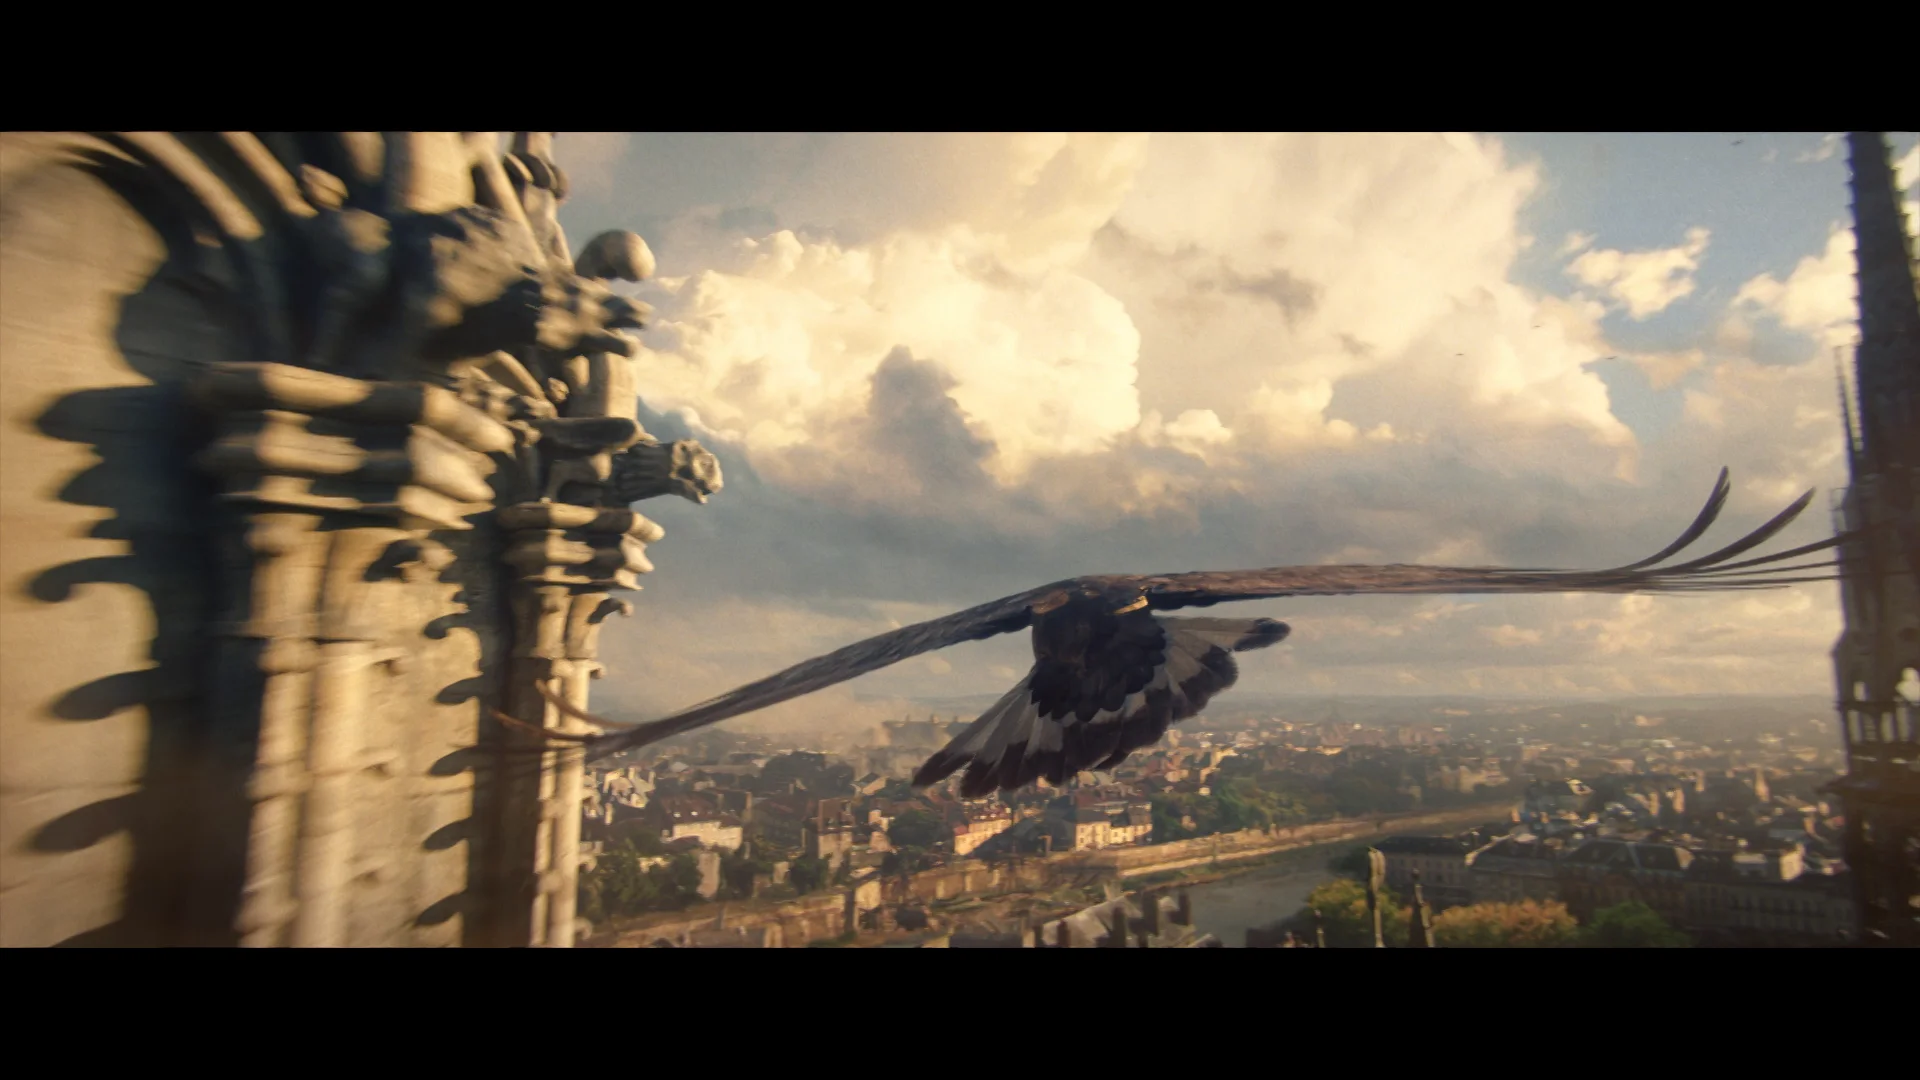 Assassin's Creed Unity TV spot Trailer [UK] - Vidéo Dailymotion